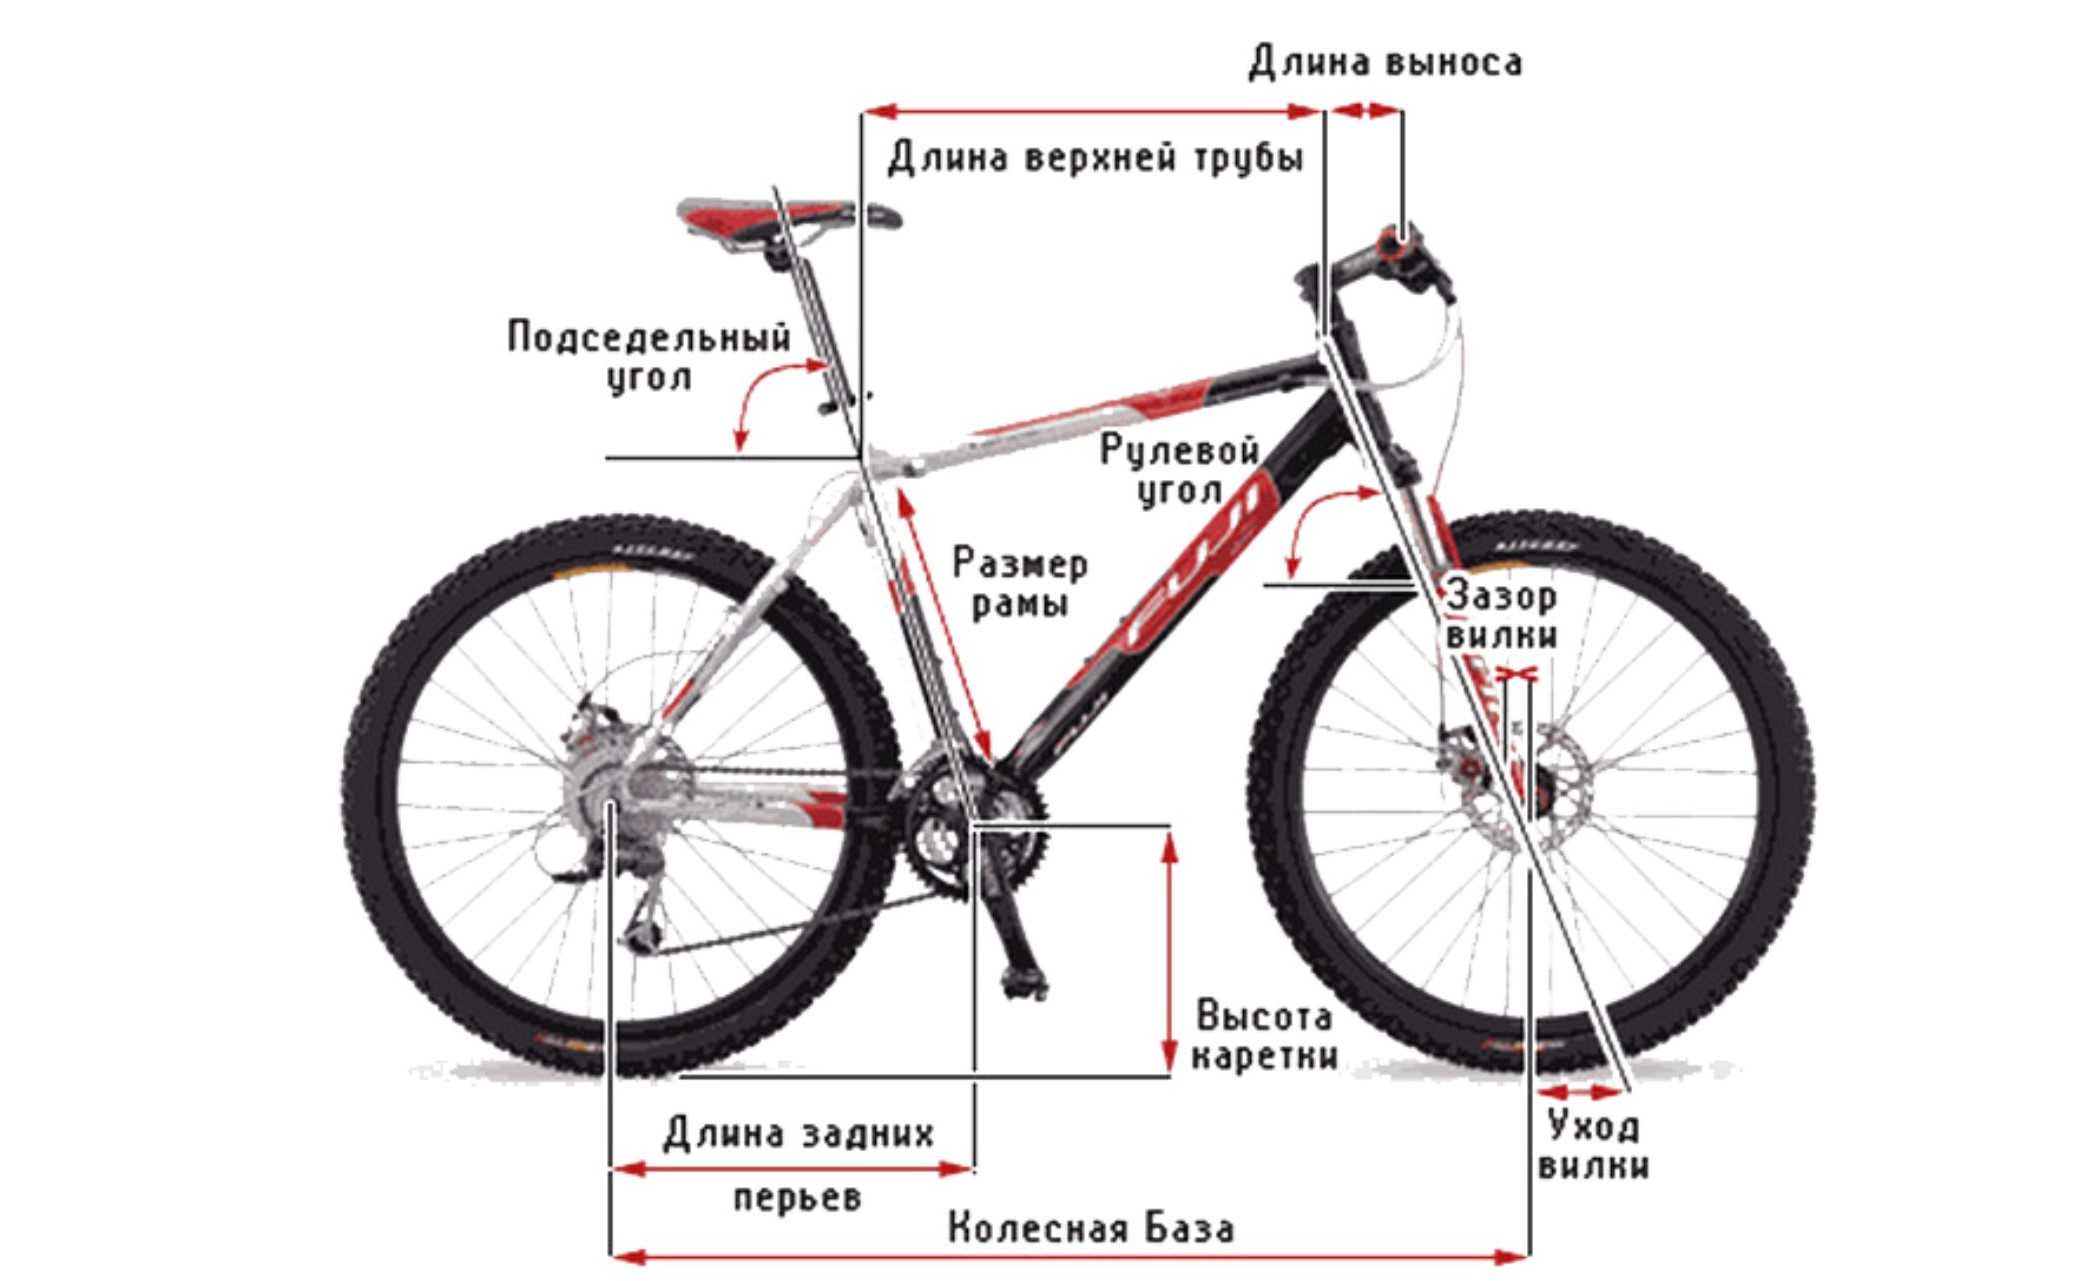 Рама 29 велосипед рост. Размер рамы велосипеда с диаметром колеса 27.5. Размер рамы - 16 " размер колес - 26 ". Длина велосипеда 27.5 с колёсами. Размер рамы 17,5, колеса 26.